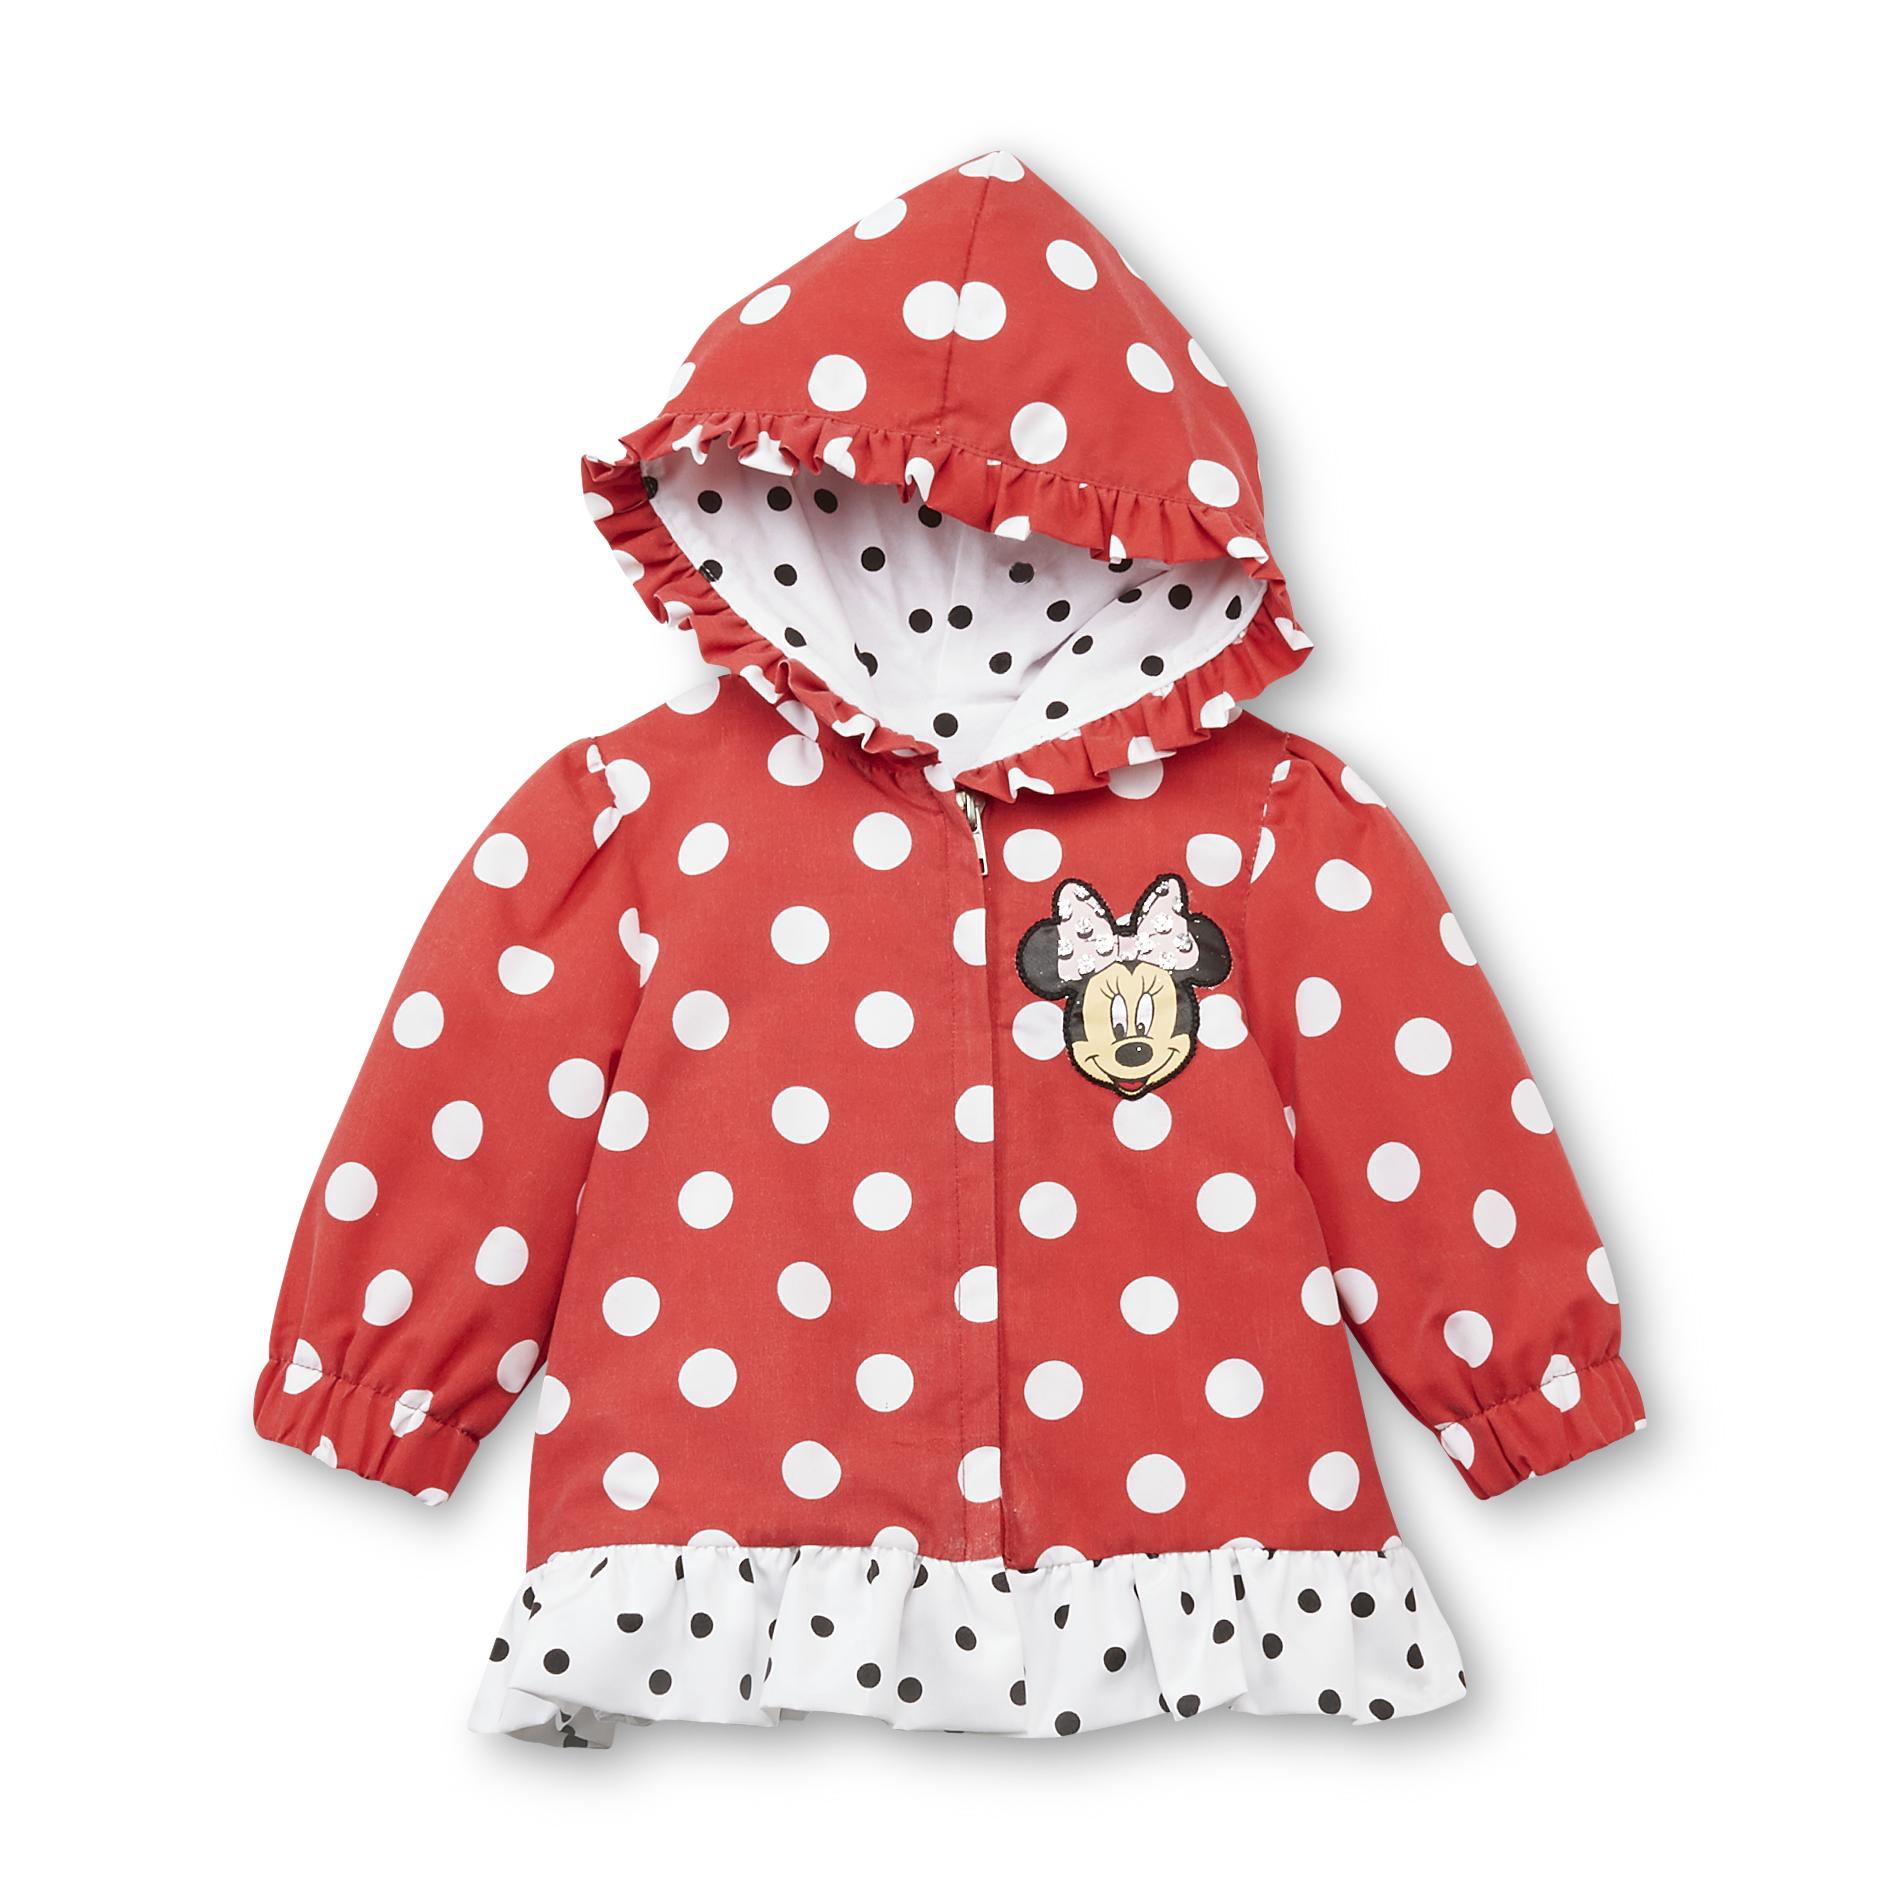 Disney Minnie Mouse Infant & Toddler Girl's Jacket - Polka Dot